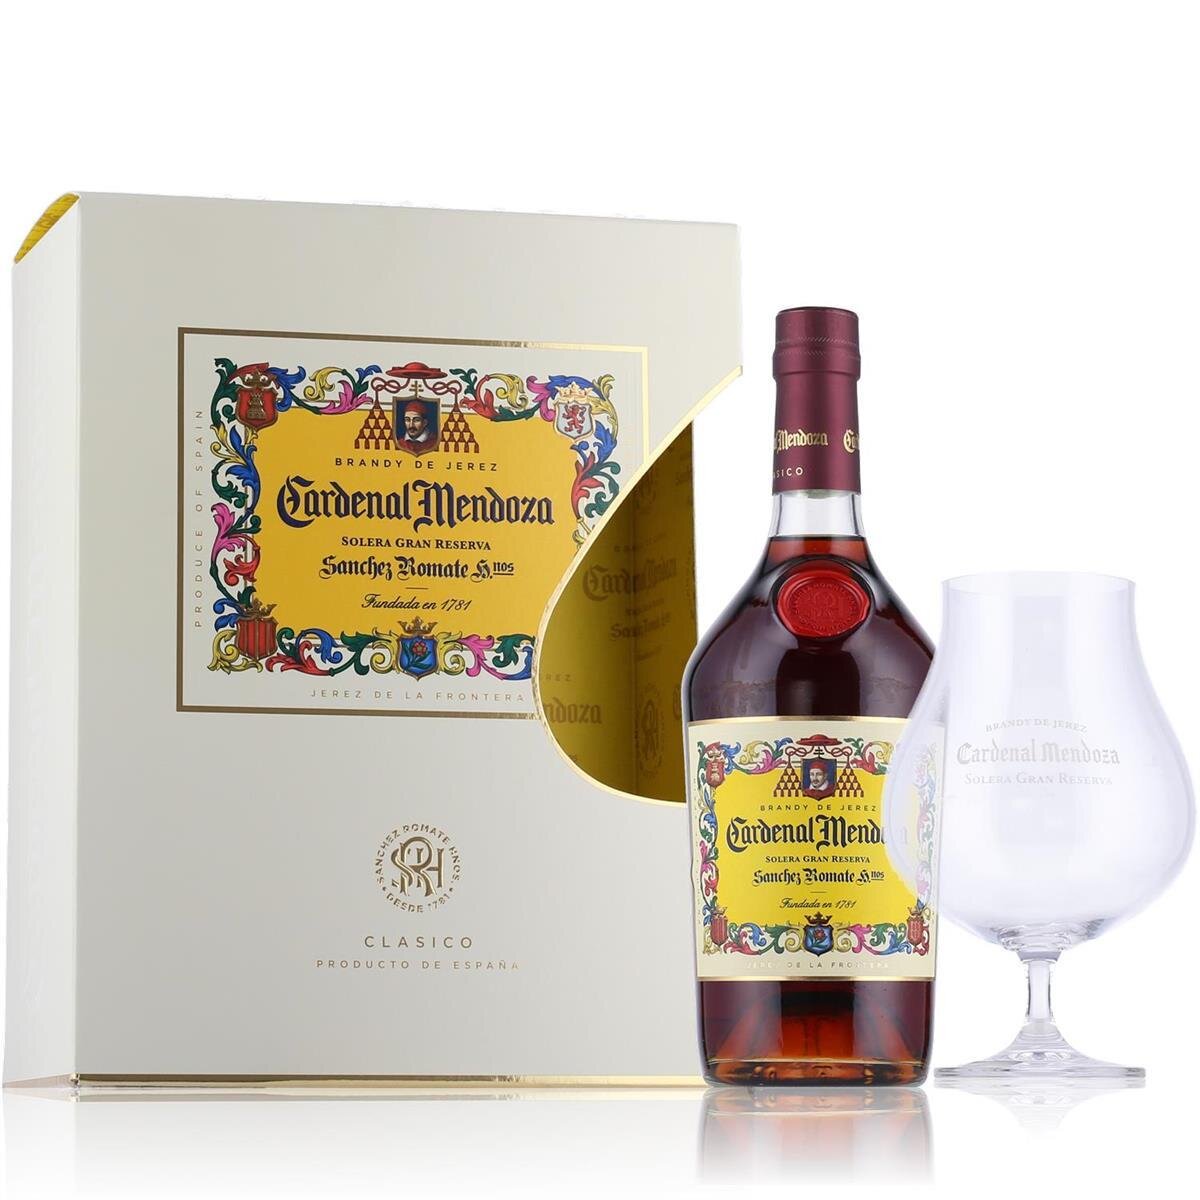 Cardenal Mendoza Vol. Brandy Reserva Geschenk in 40% 0,7l Solera Gran